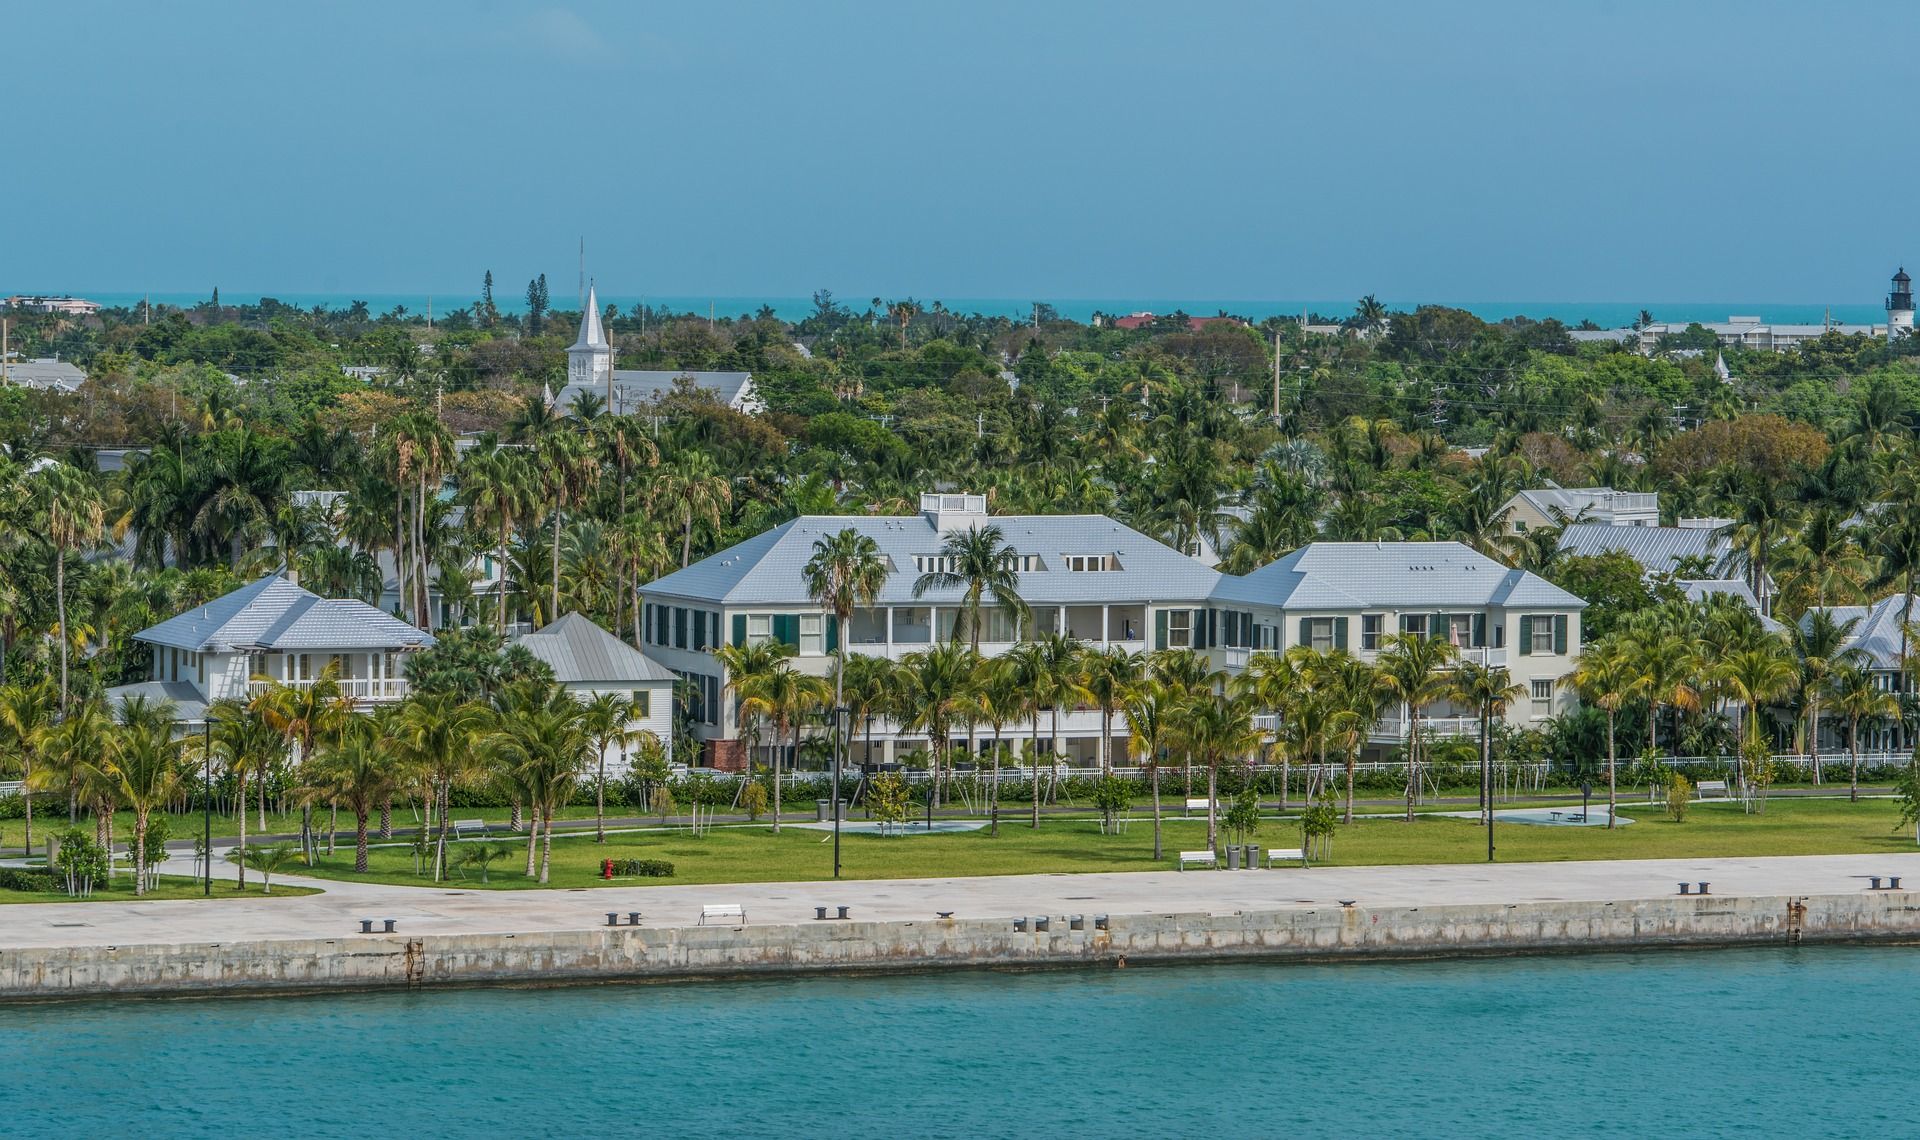 Key West Island, Florida